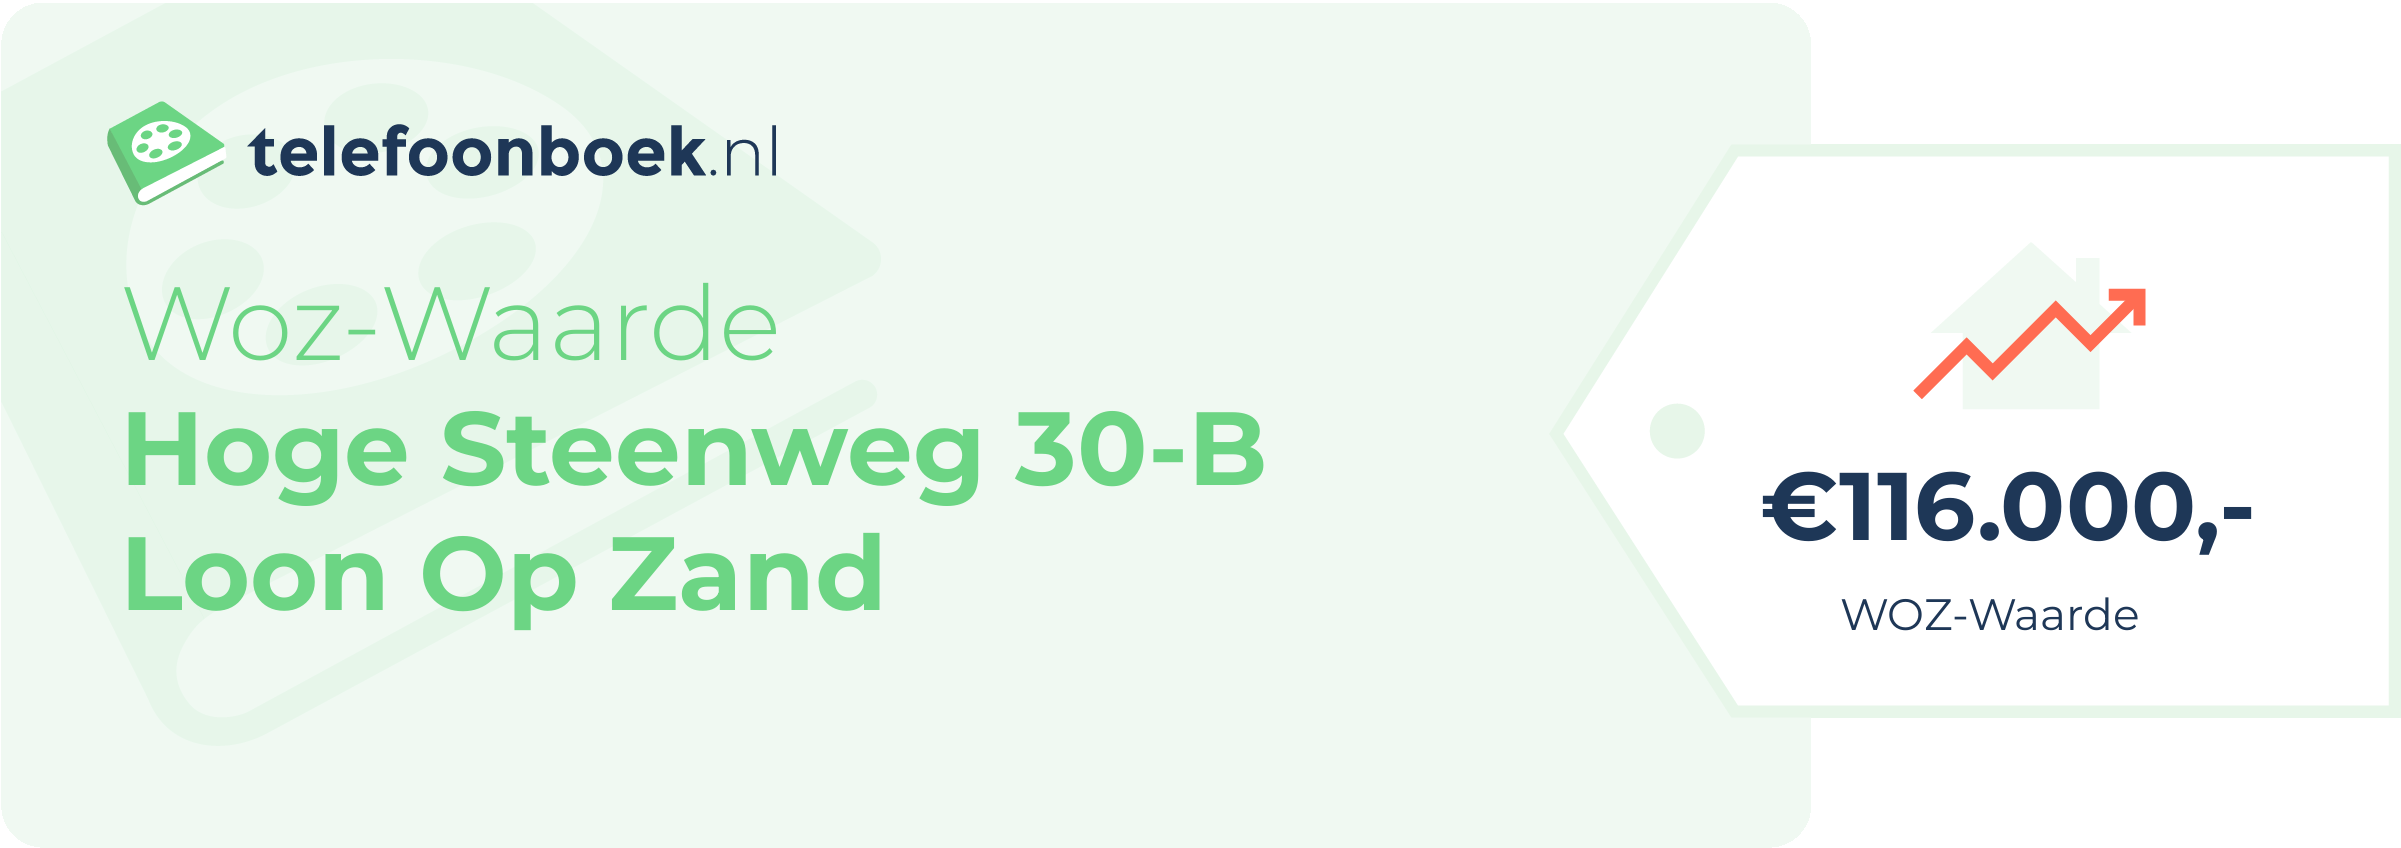 WOZ-waarde Hoge Steenweg 30-B Loon Op Zand